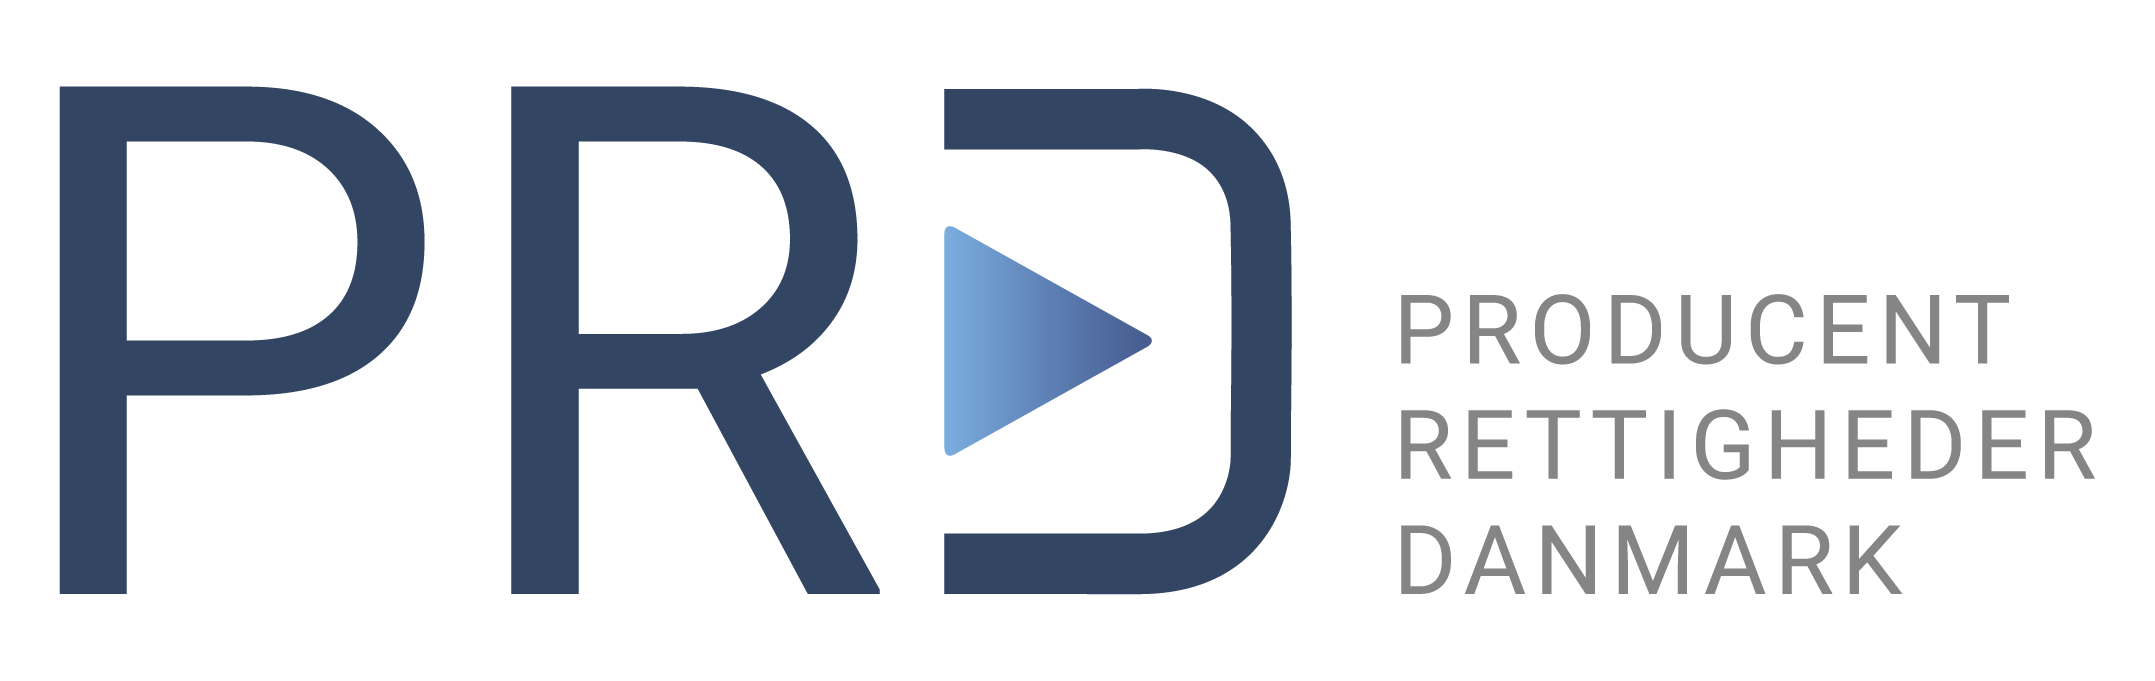 prd-logo-dk-rgb-original.png